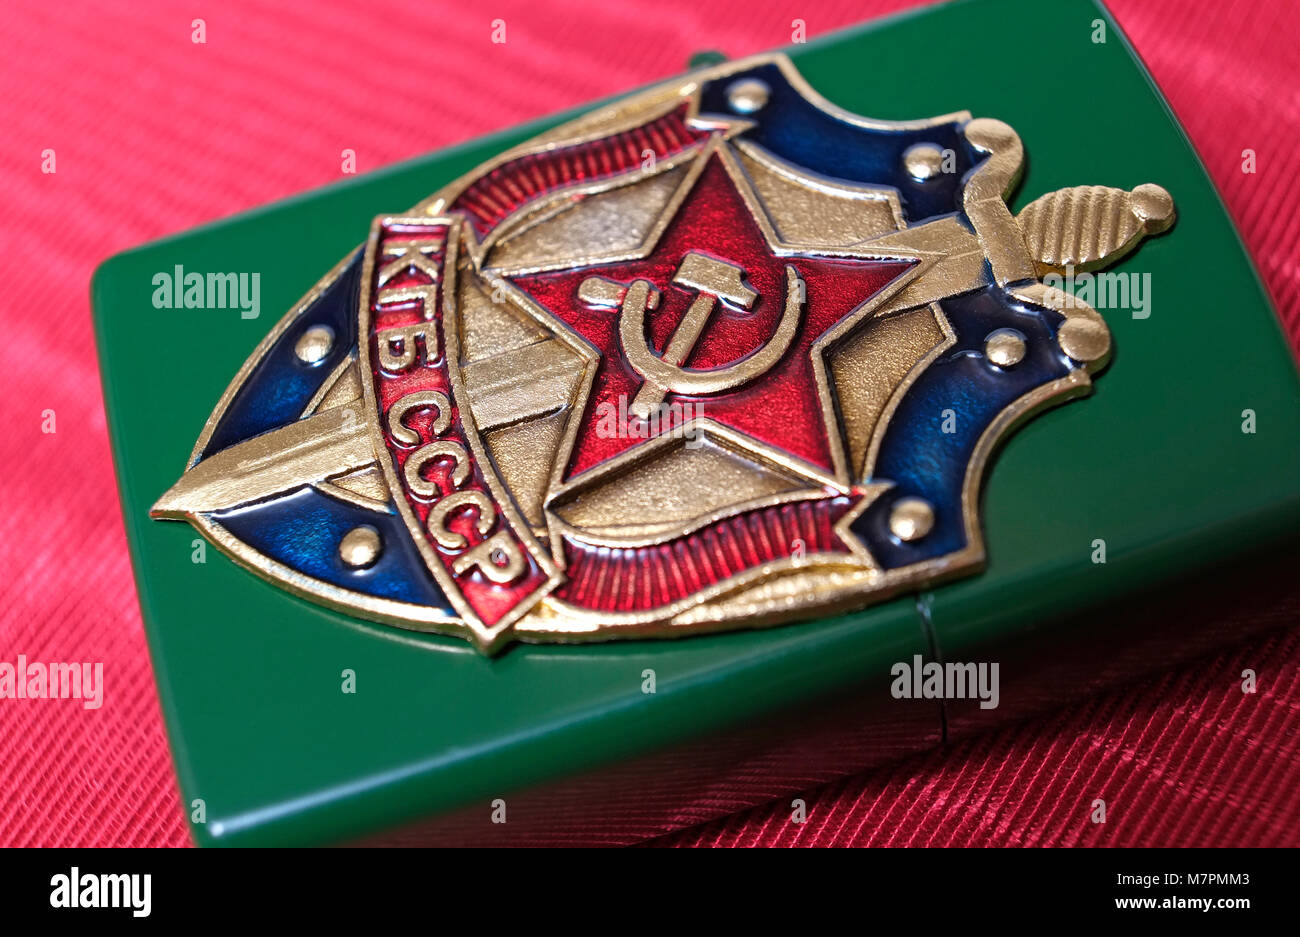 russian kgb badge on metal cigarette lighter Stock Photo - Alamy